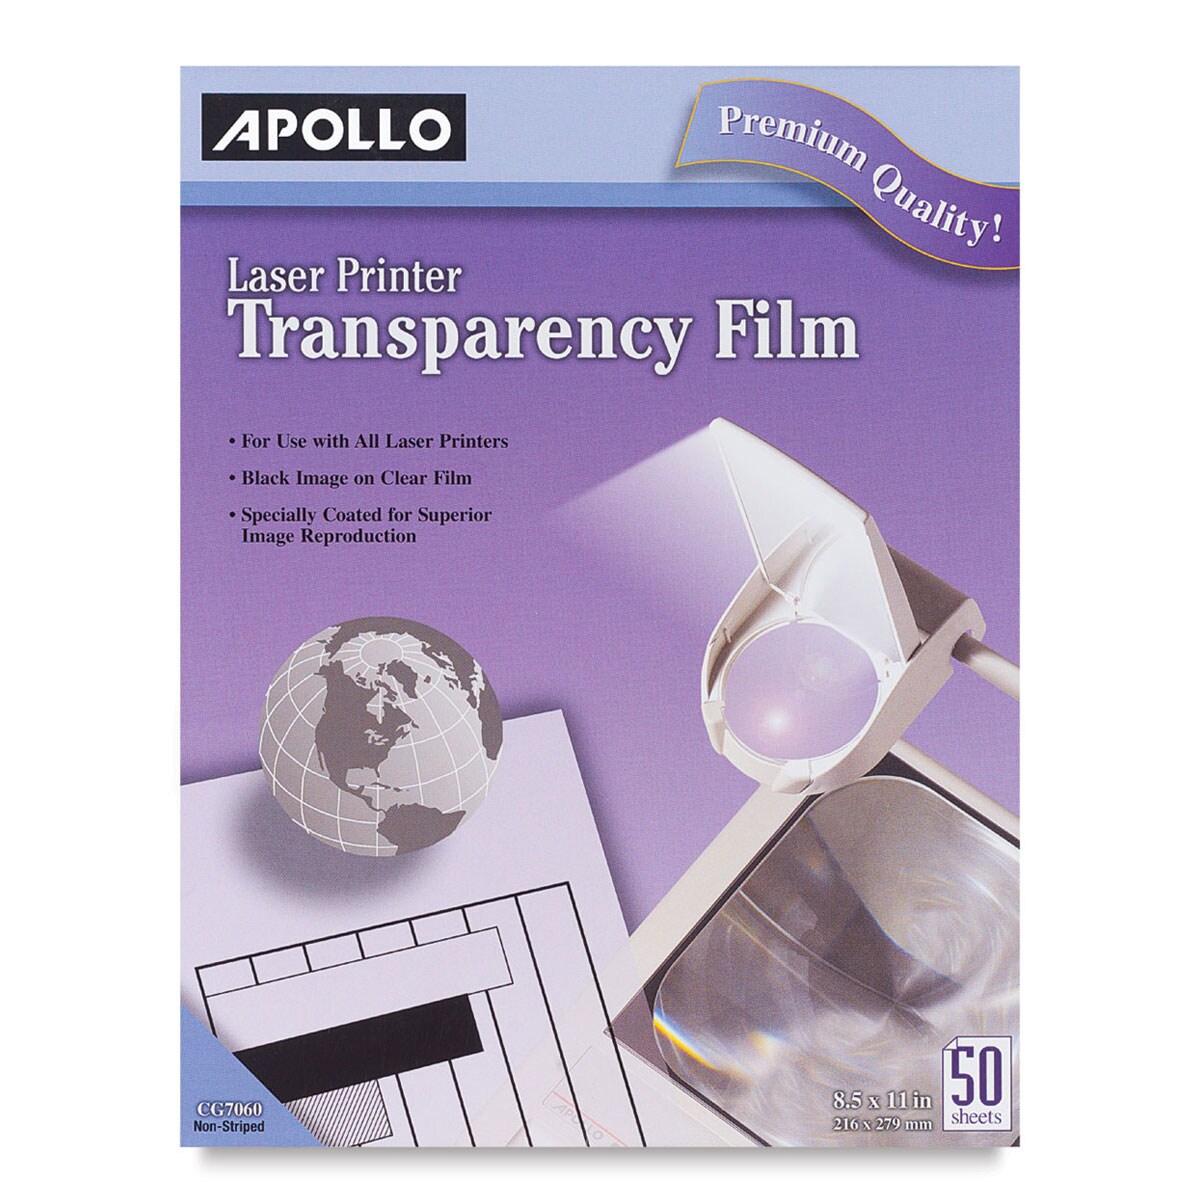 Apollo Transparency Film - 50 Sheets, Laser Printer